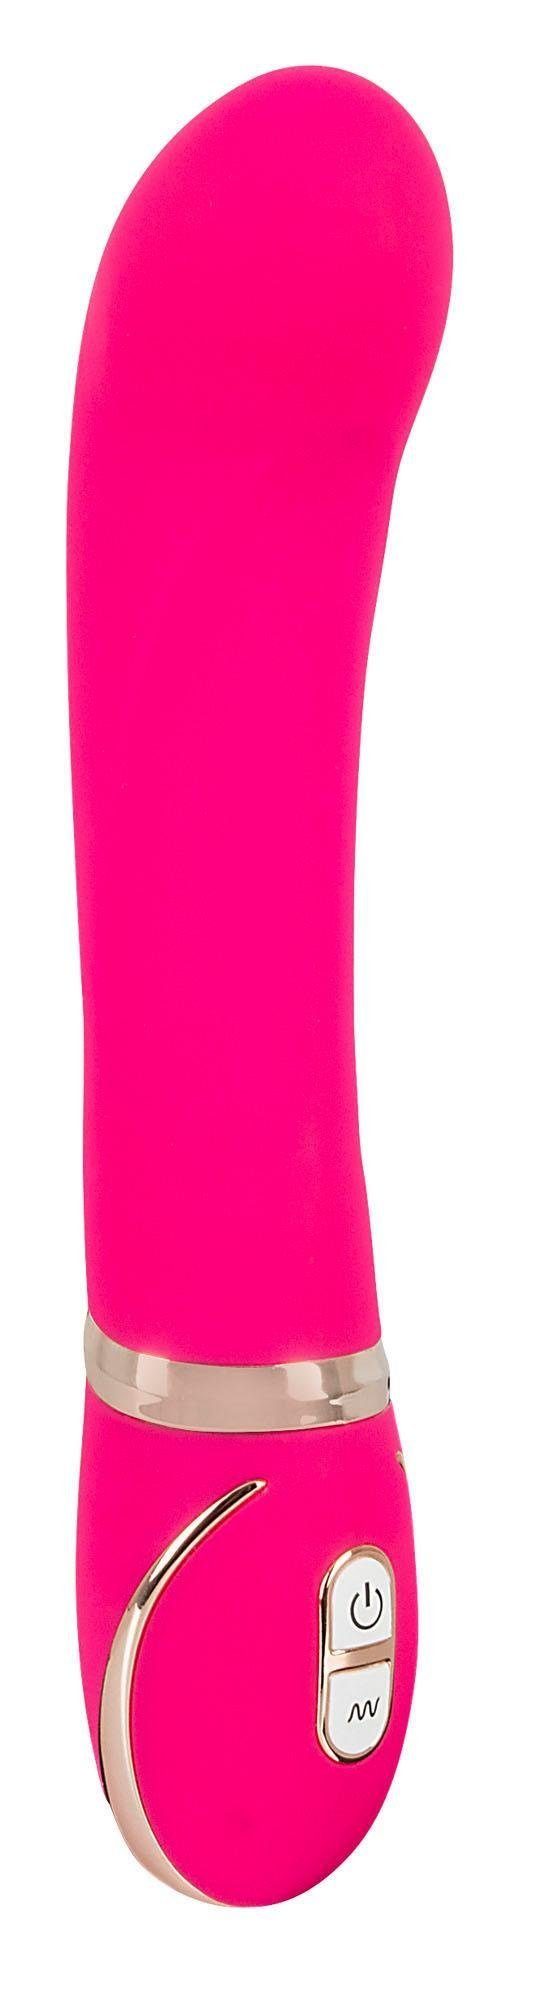 Vibe Couture G-Punkt-Vibrator Front Row Pink, wasserdicht